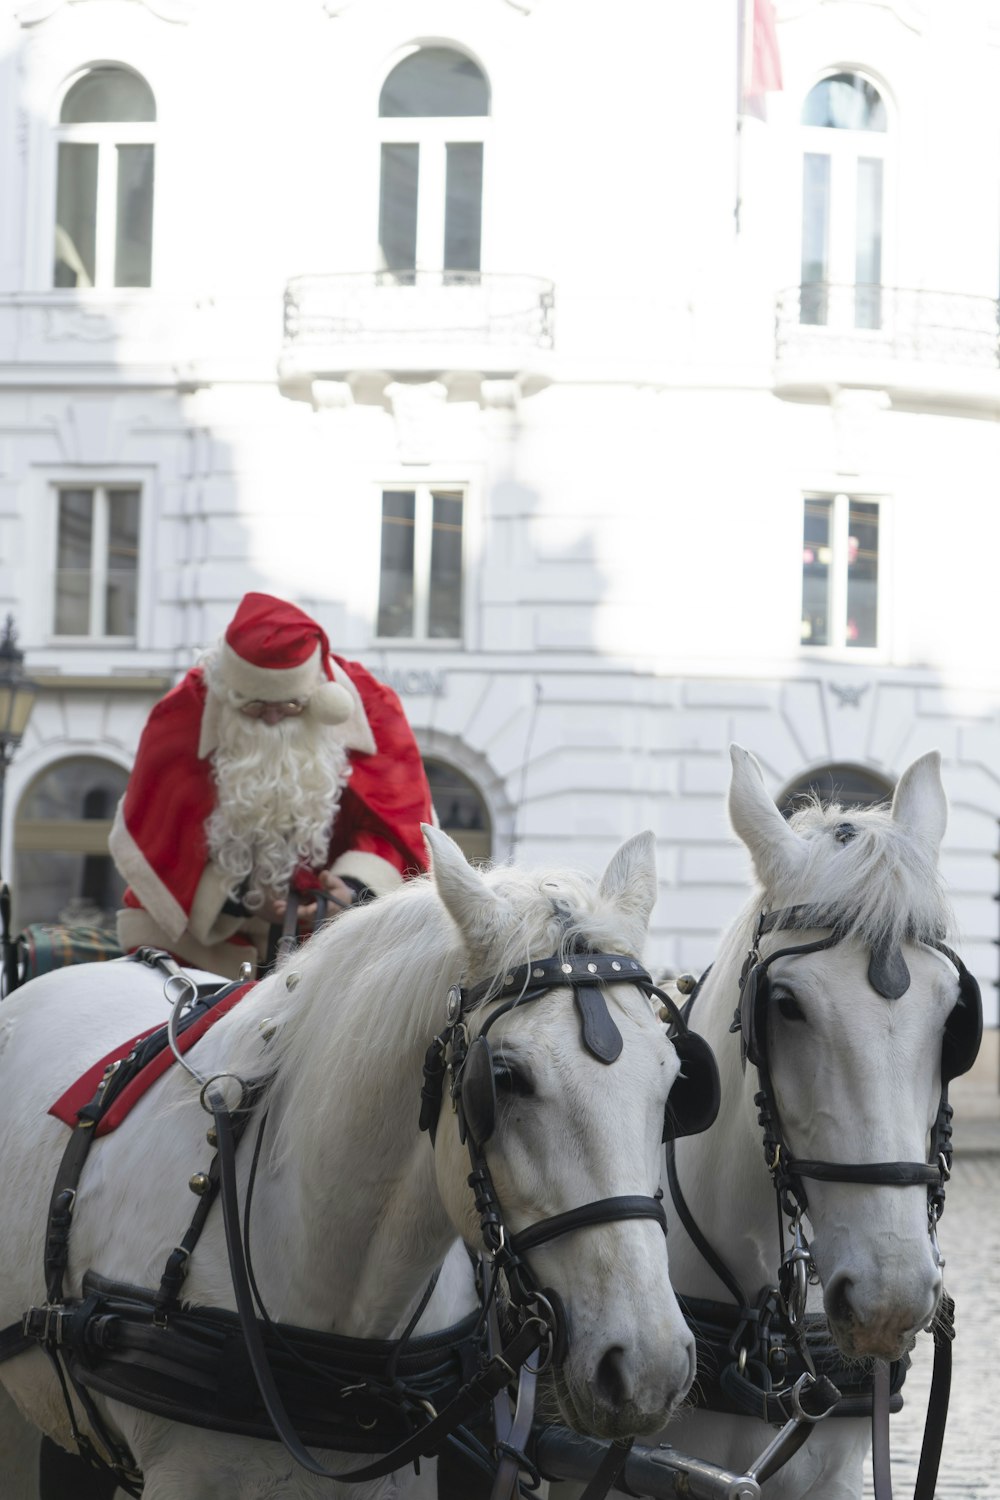 Un hombre vestido como Santa Claus montado en un carruaje tirado por caballos